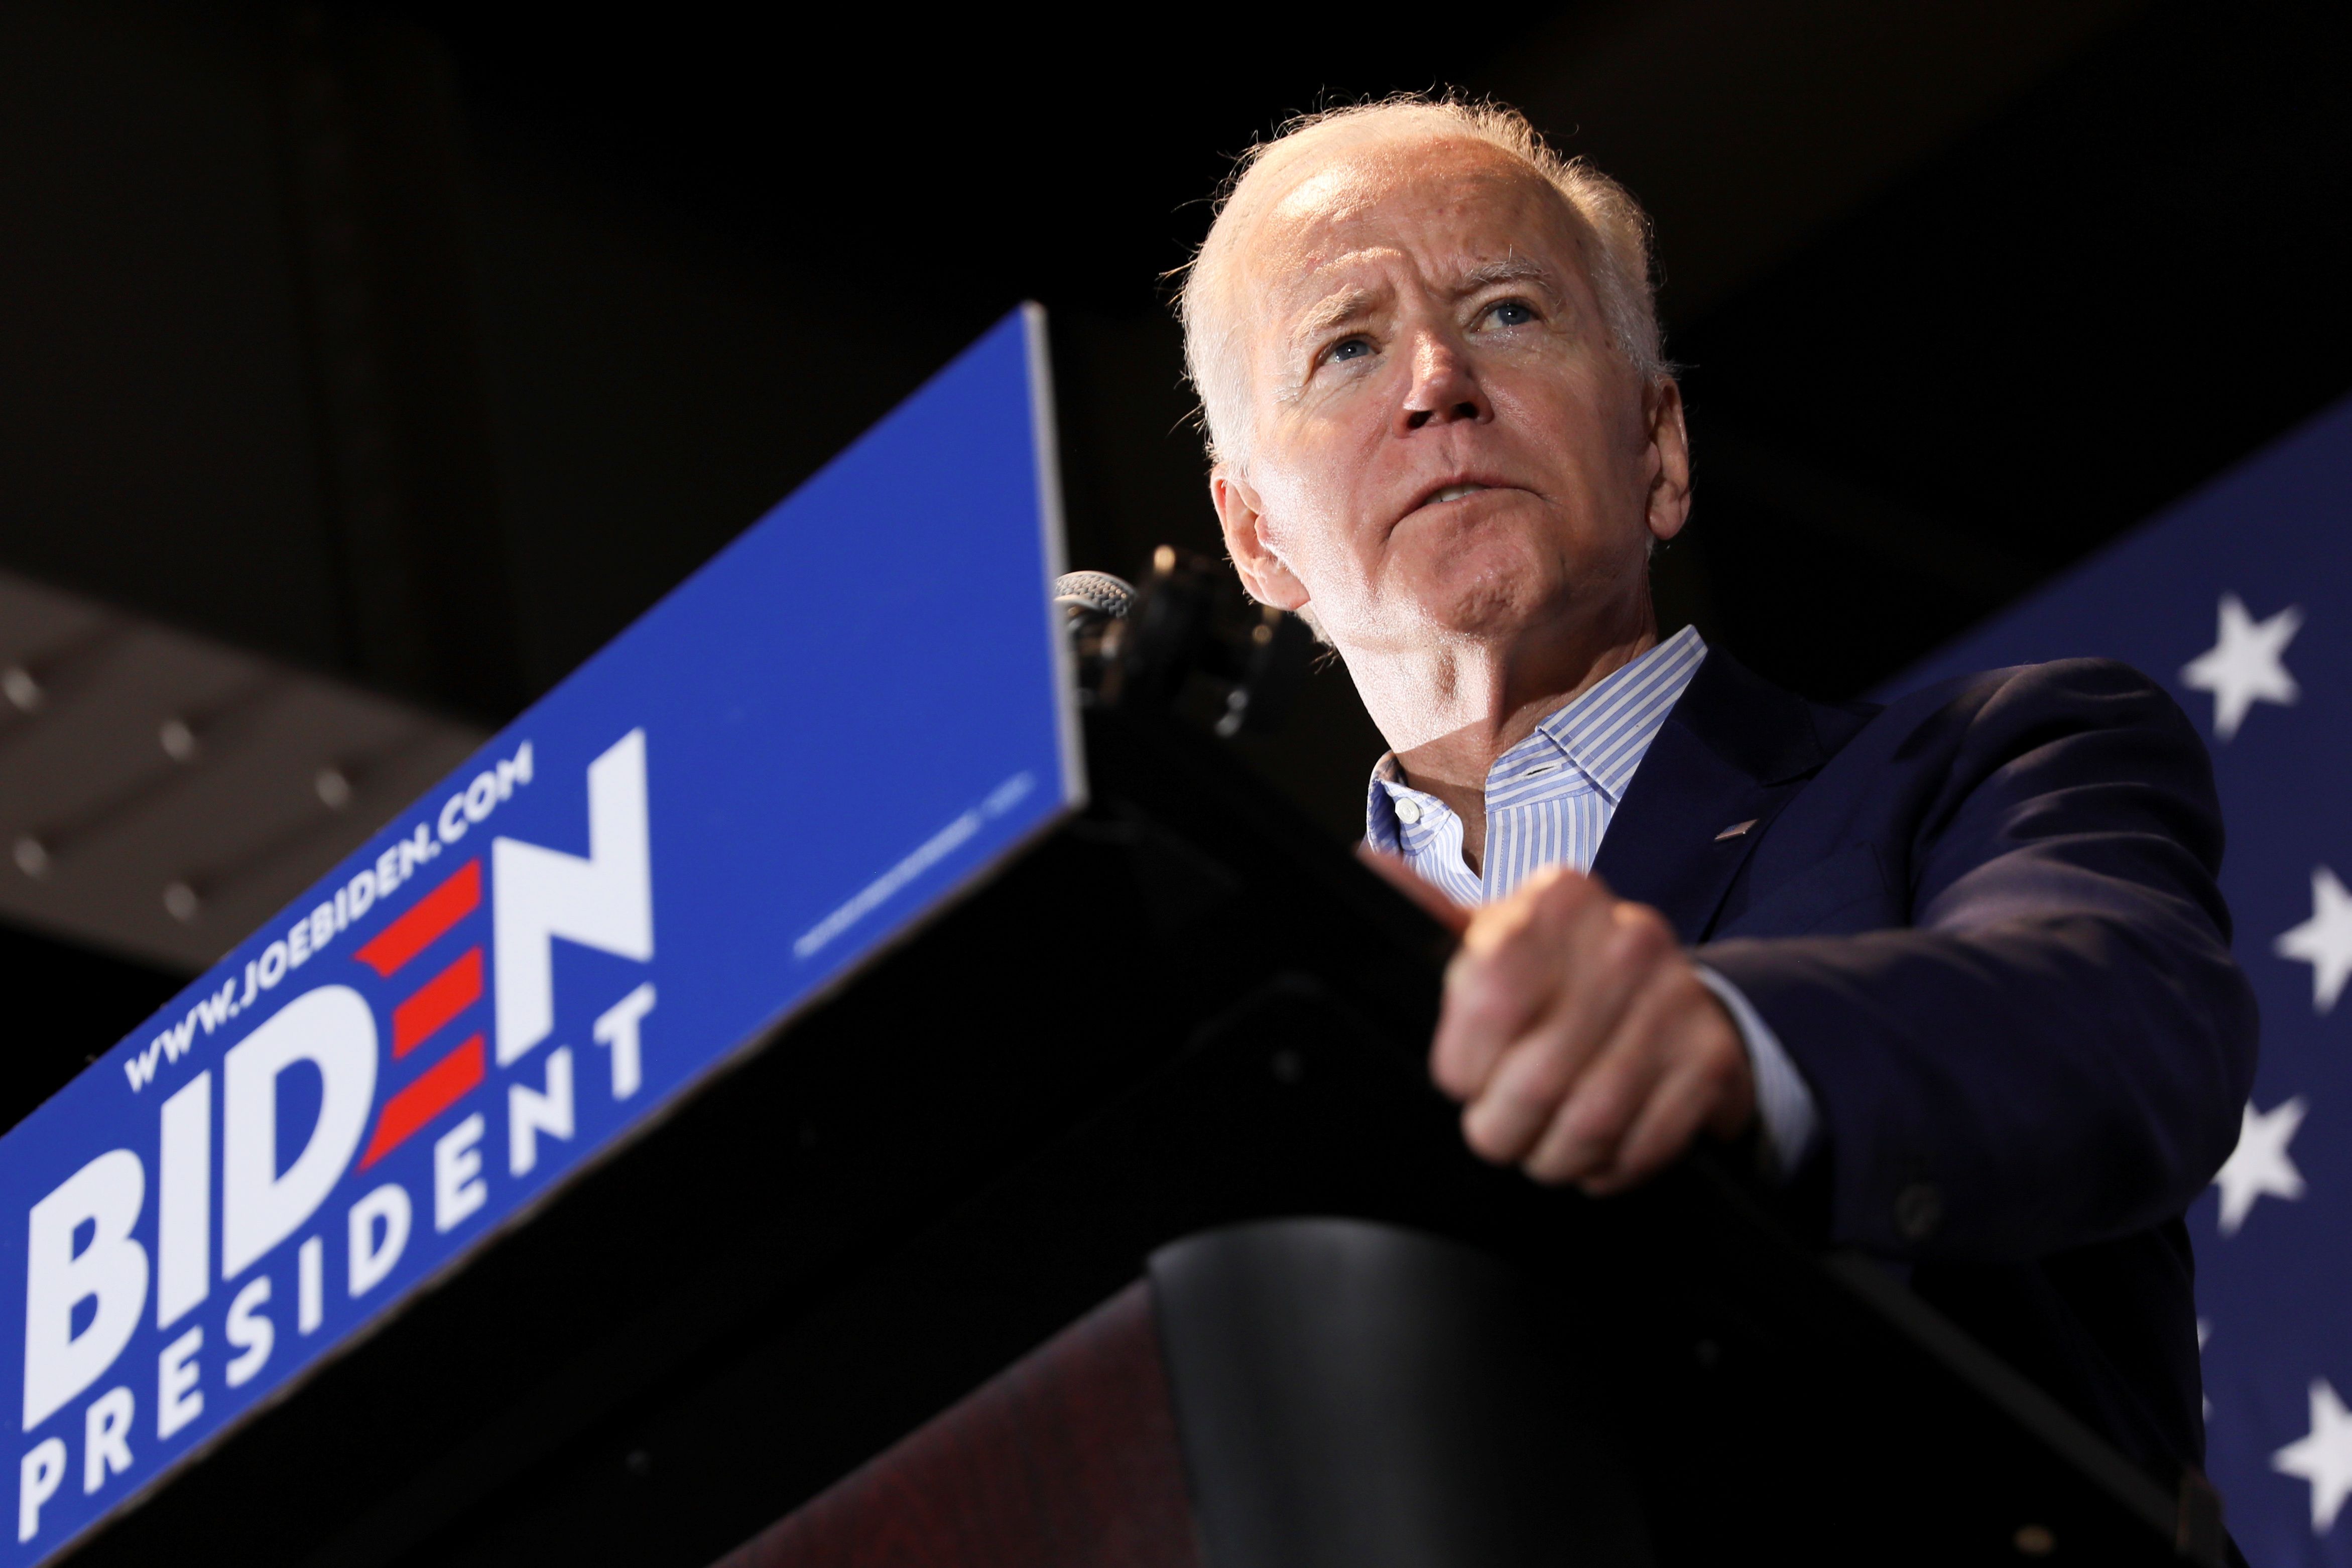 Biden's 2020 bid is sending health care stocks up